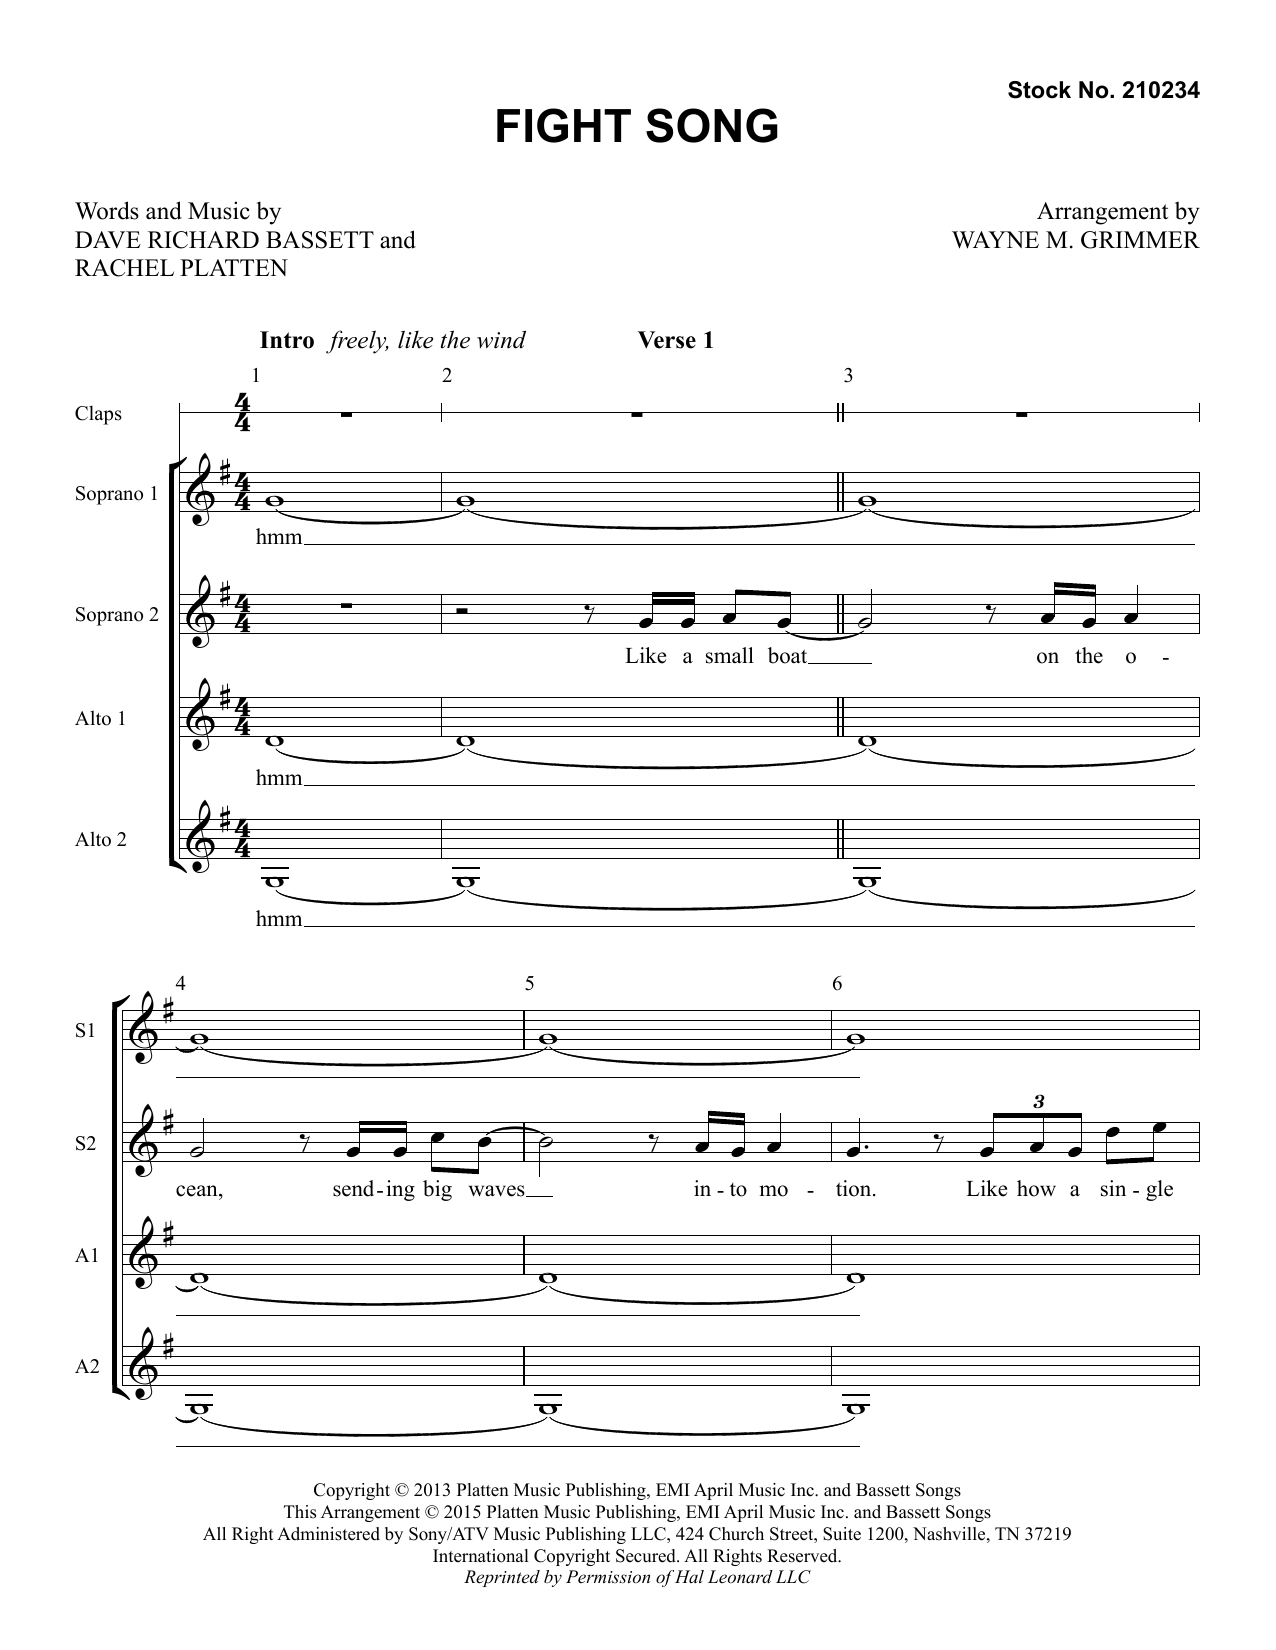 Rachel Platten Fight Song (arr. Wayne Grimmer) Sheet Music Notes & Chords for SSA Choir - Download or Print PDF